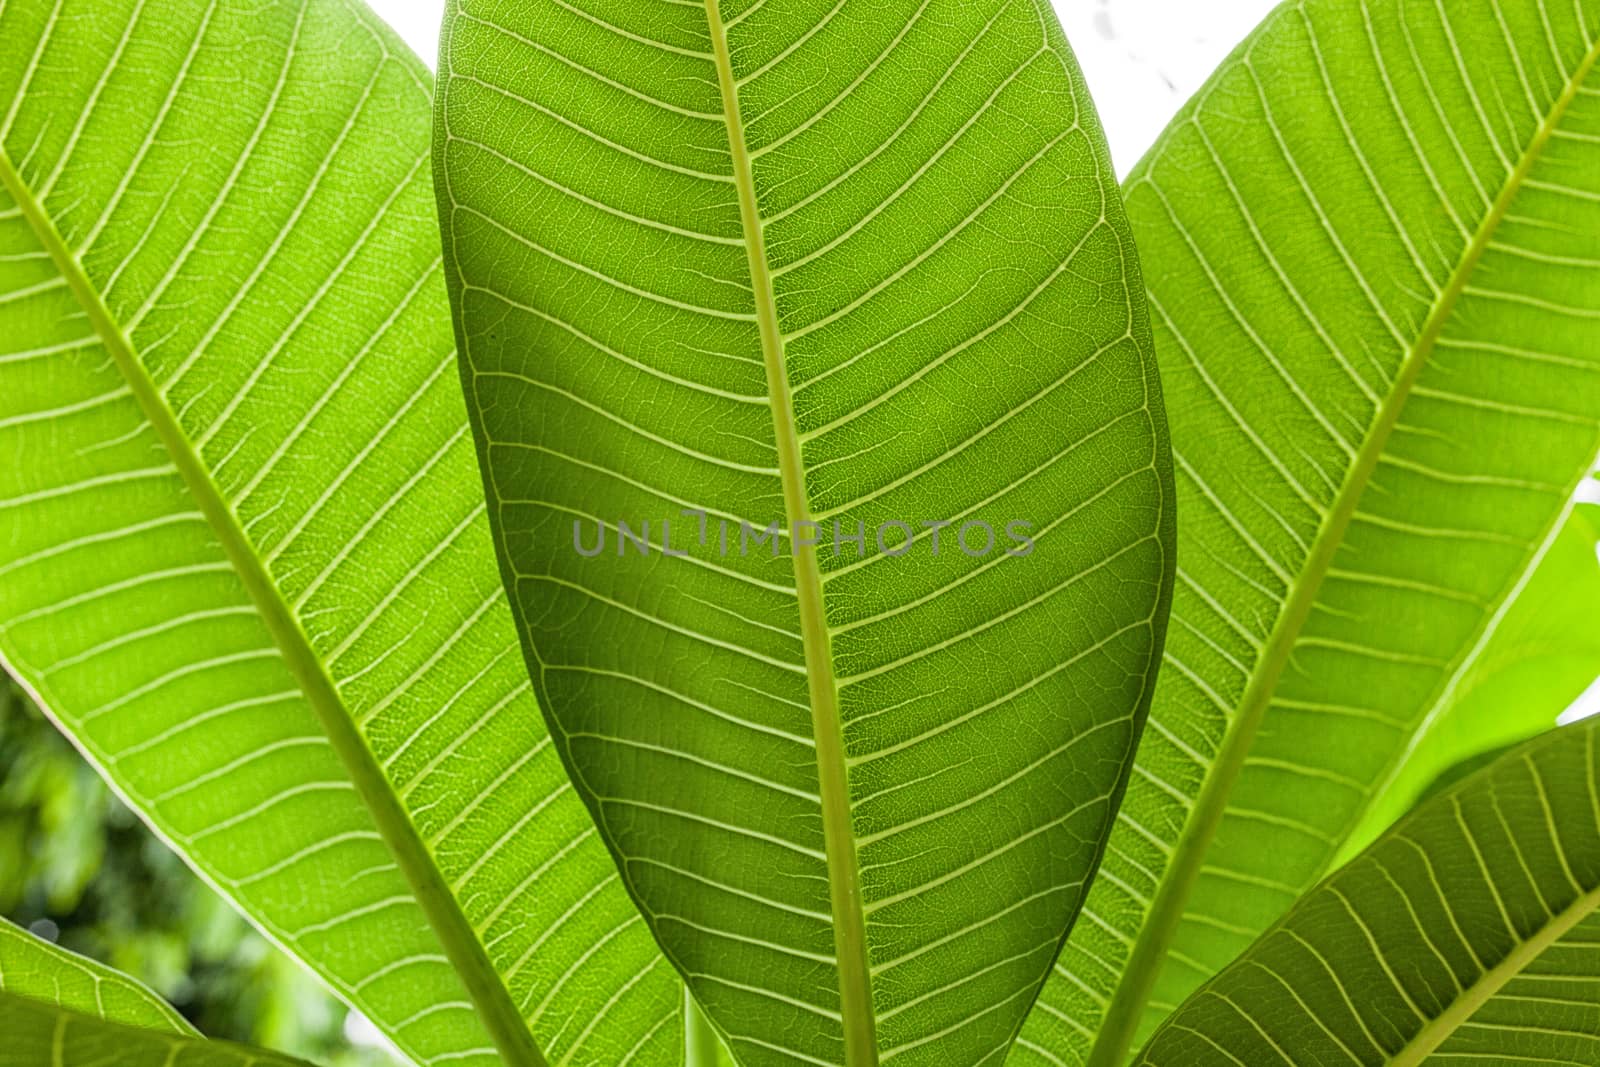 Fresh green leaf texture background .